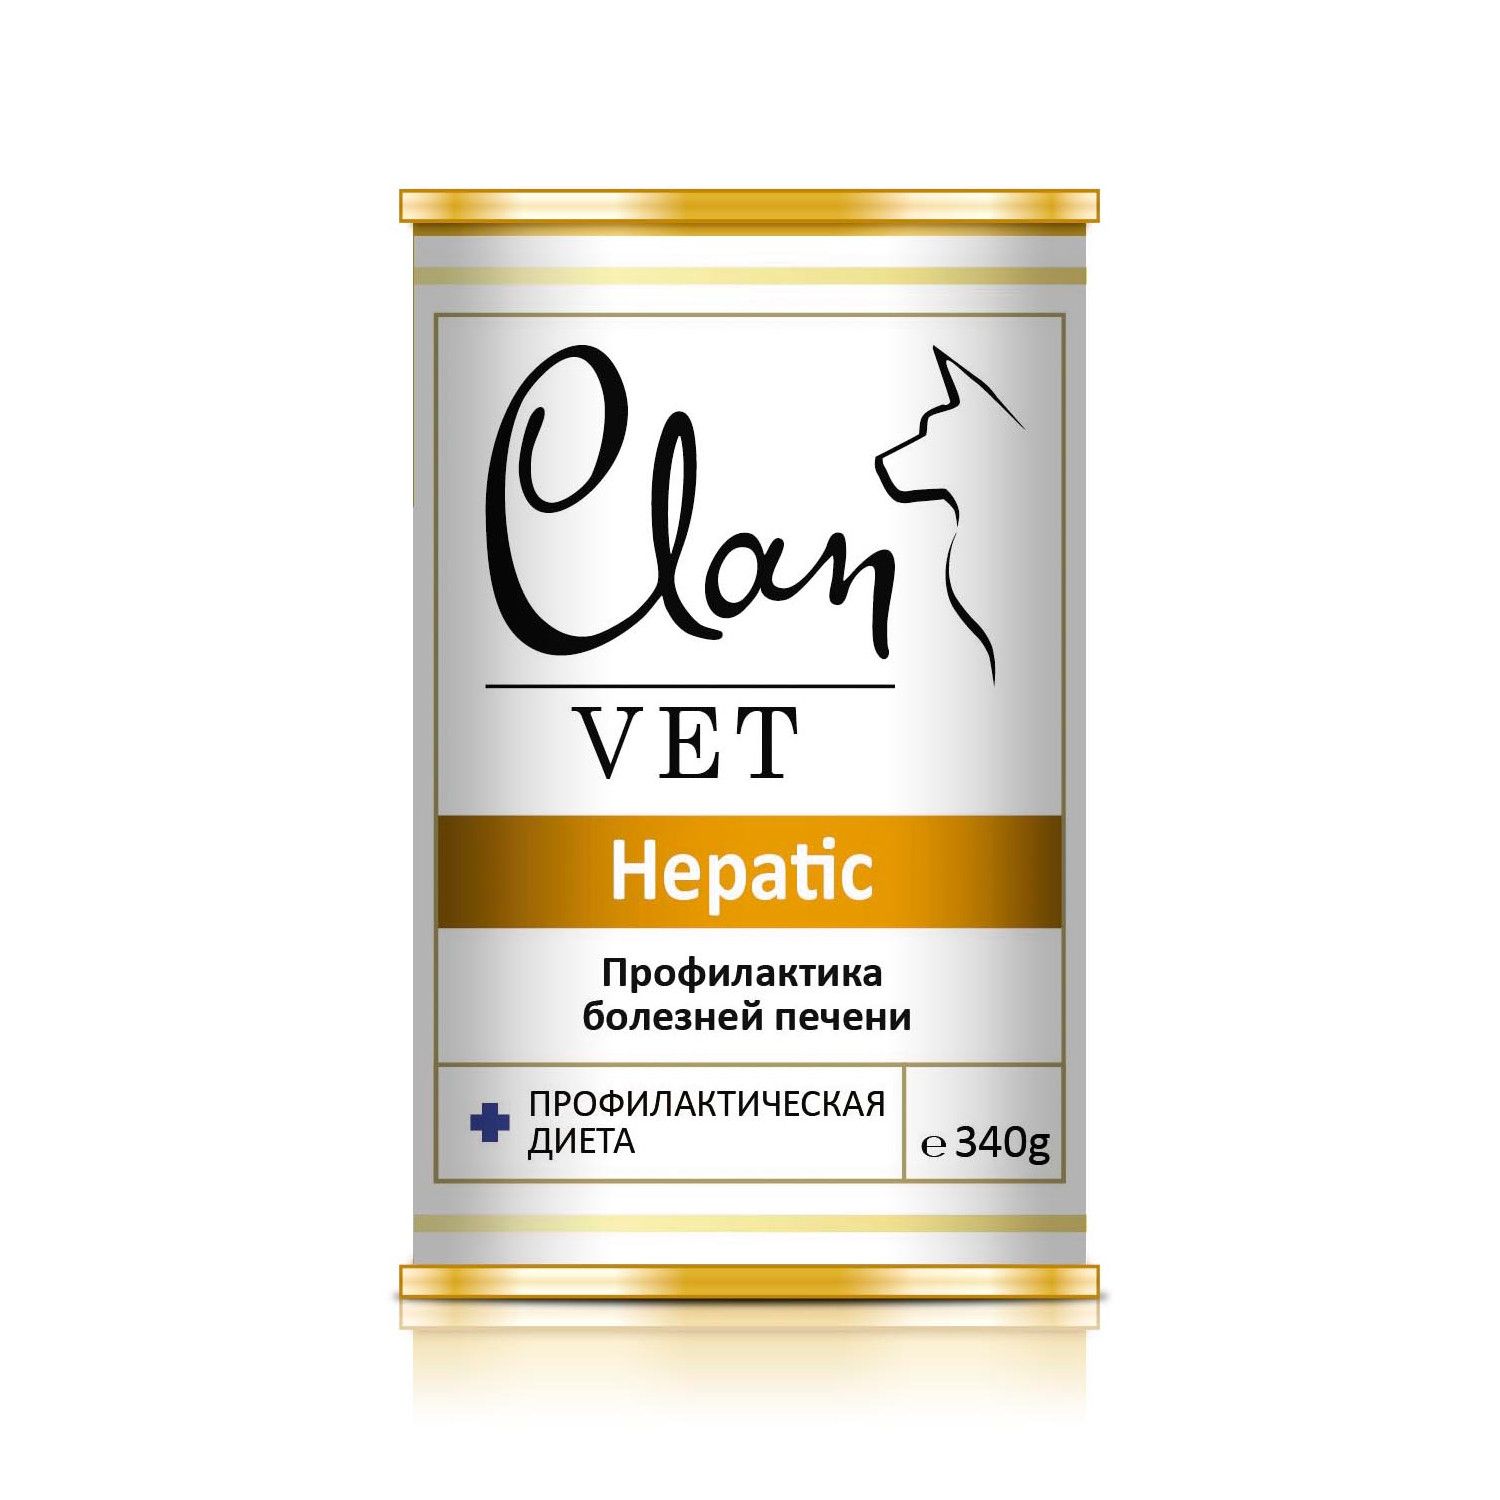 Корм hepatic для собак. Clan vet Gastrointestinal для собак. Корм клан Гепатик. Гастро Интестинал для собак консервы. Консервы Clan для собак hepatic.